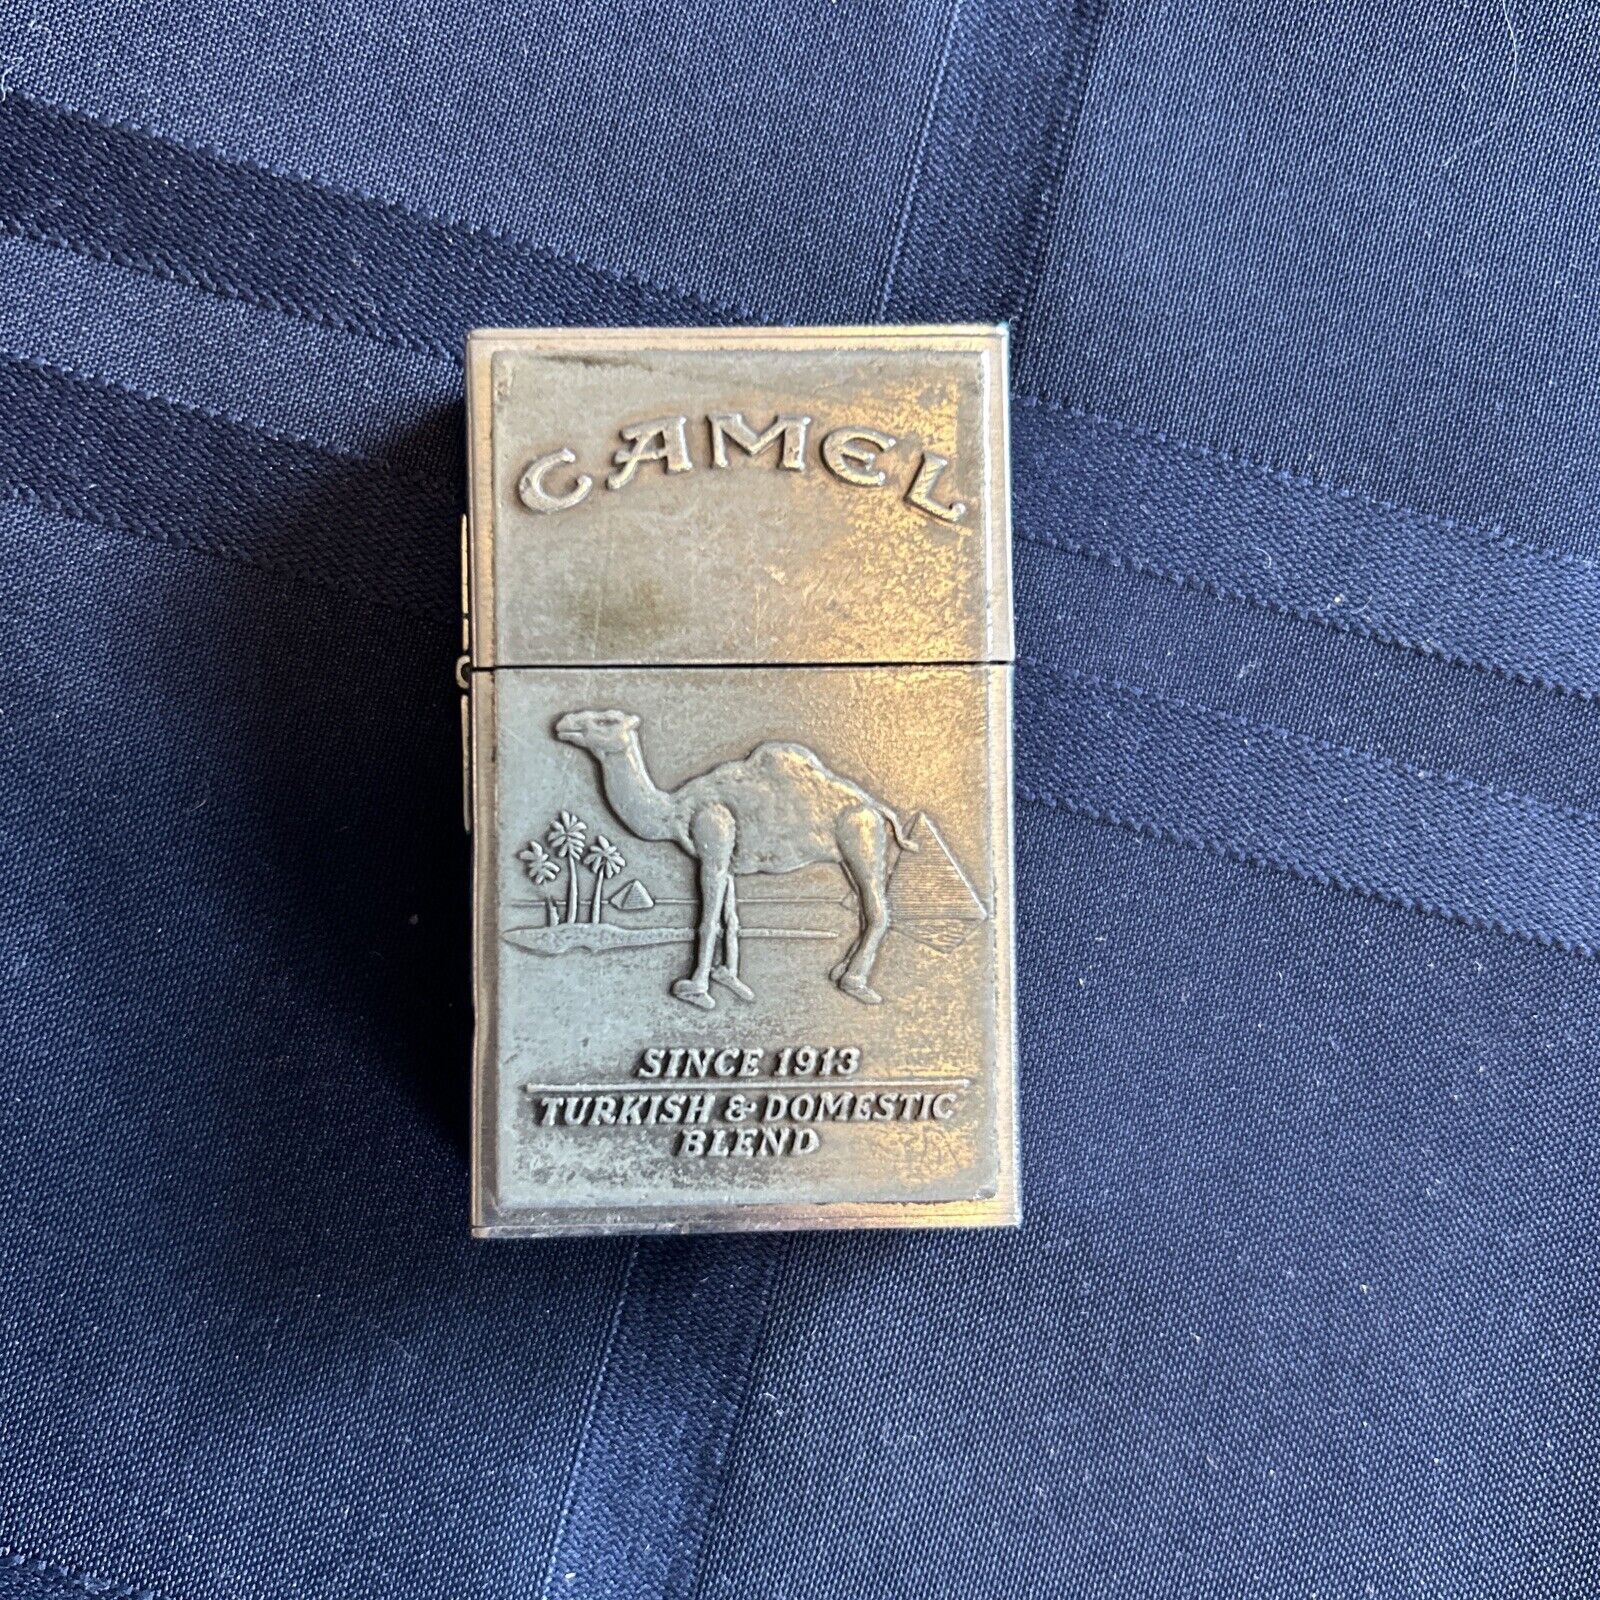 1997 Vintage Zippo Lighter - 1932 Camel Replica - Second Release